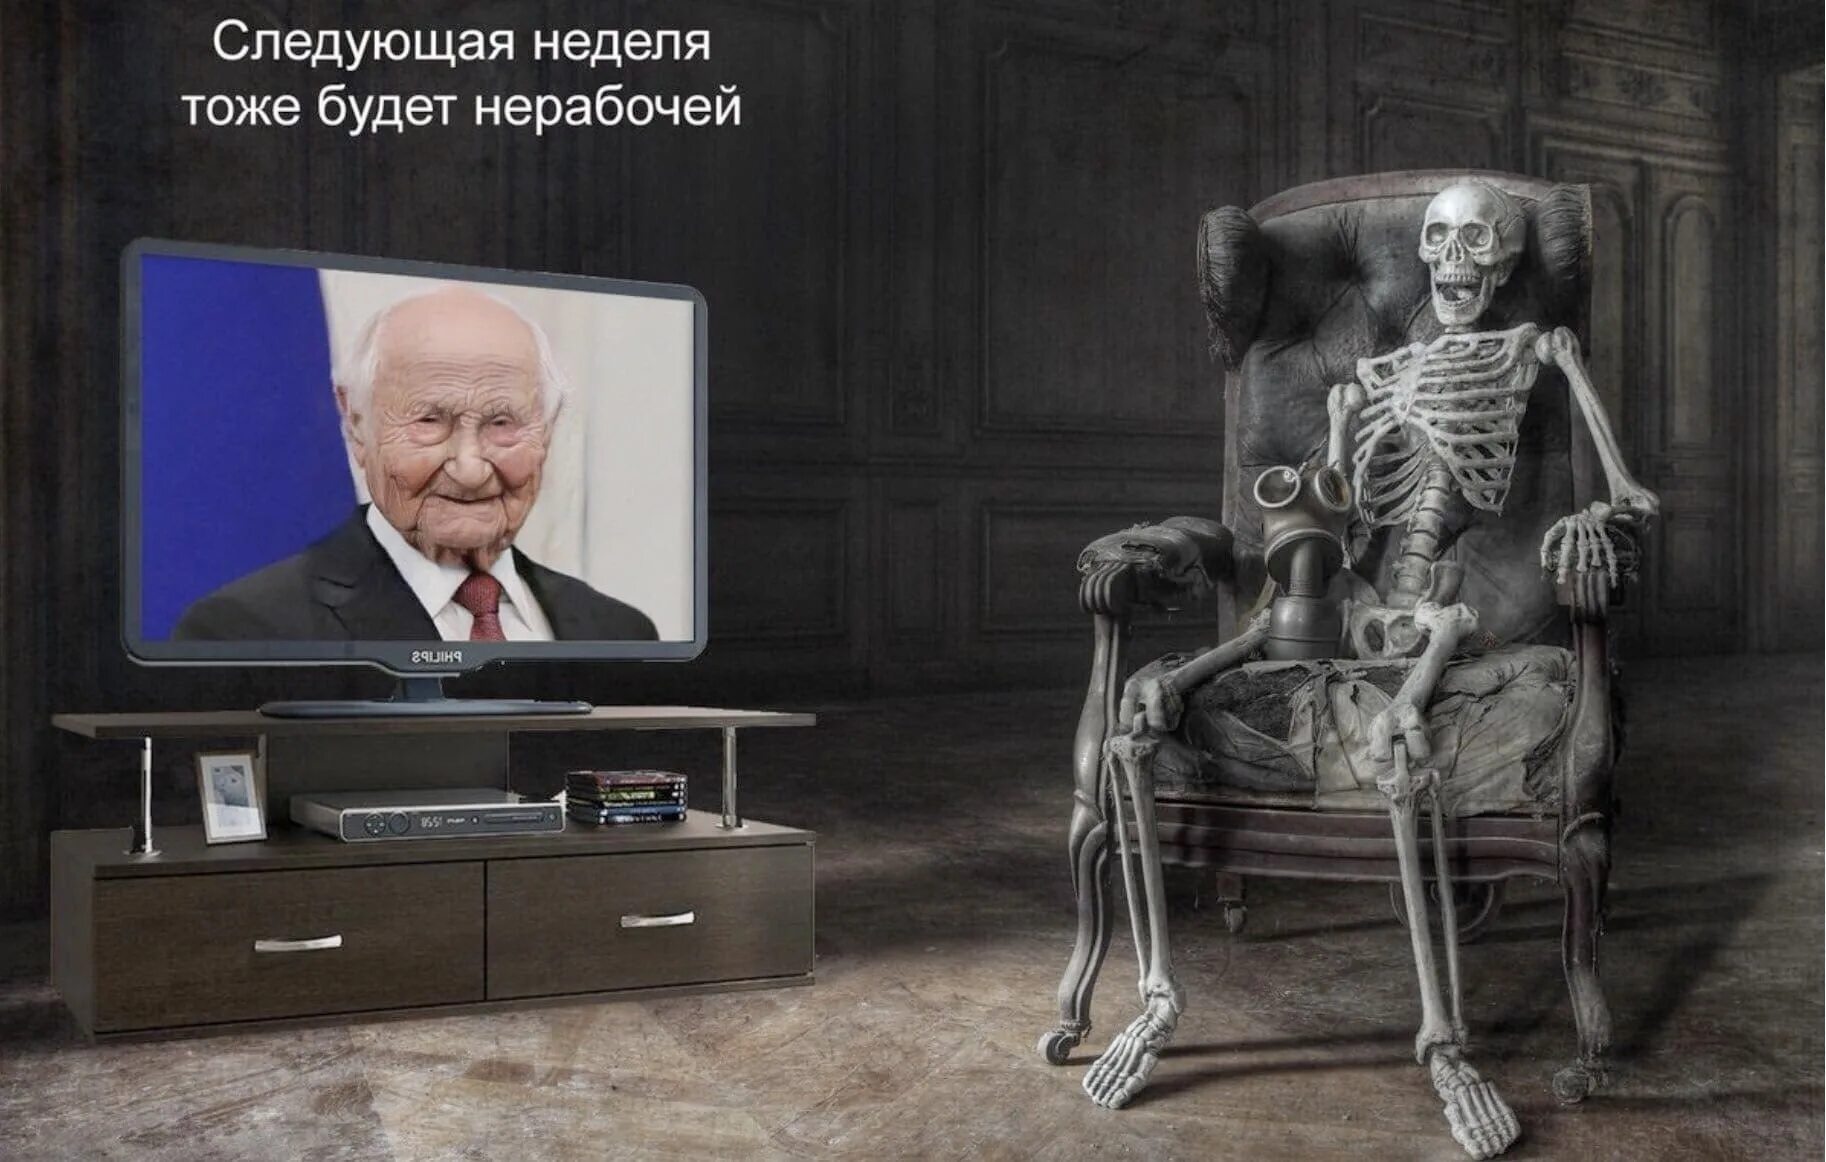 Скелет у телевизора с Путиным.